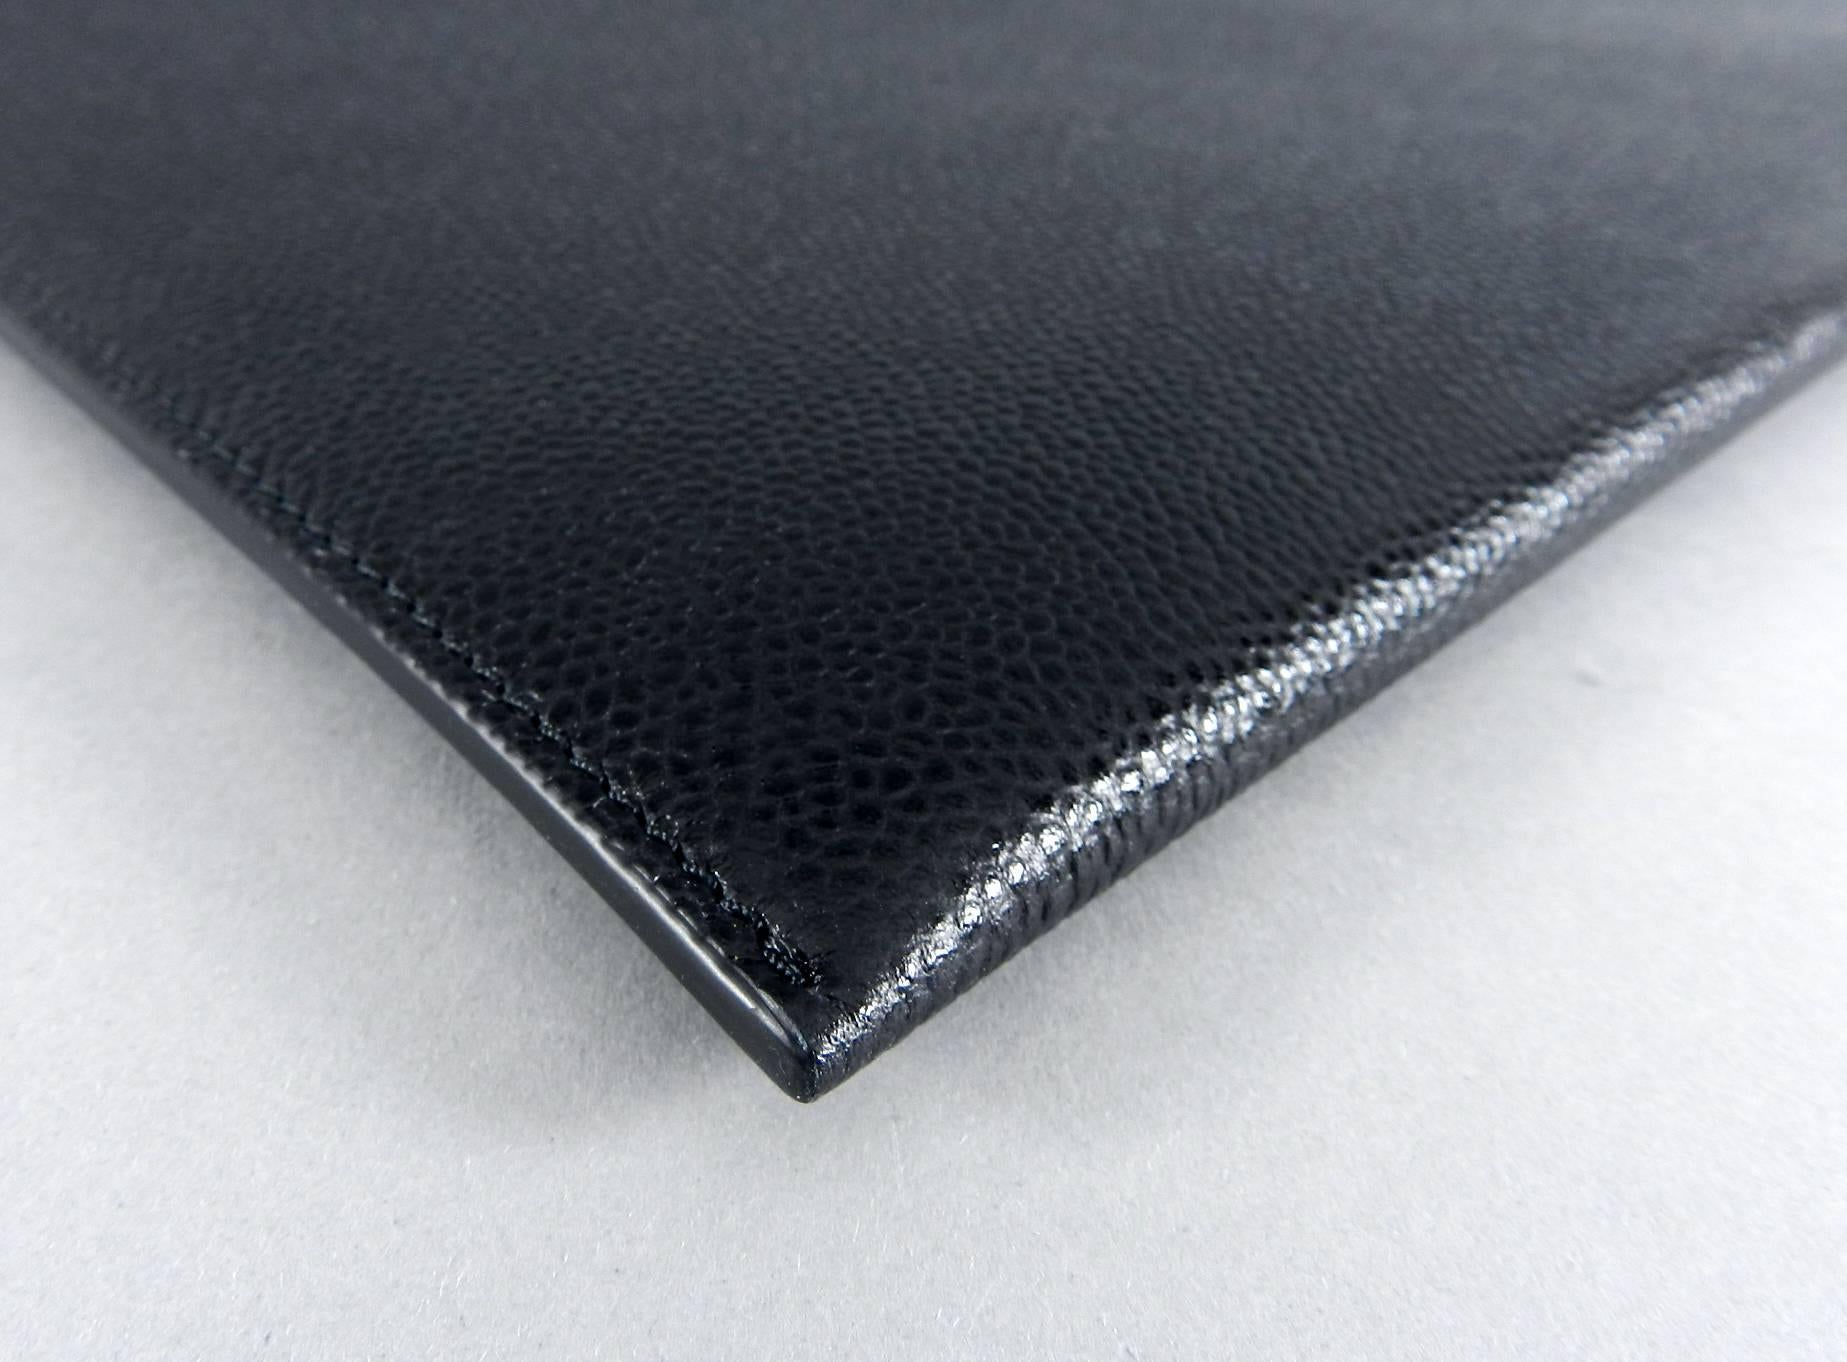 Thom Browne New York Black Leather Flat Portfolio / Clutch Bag 1